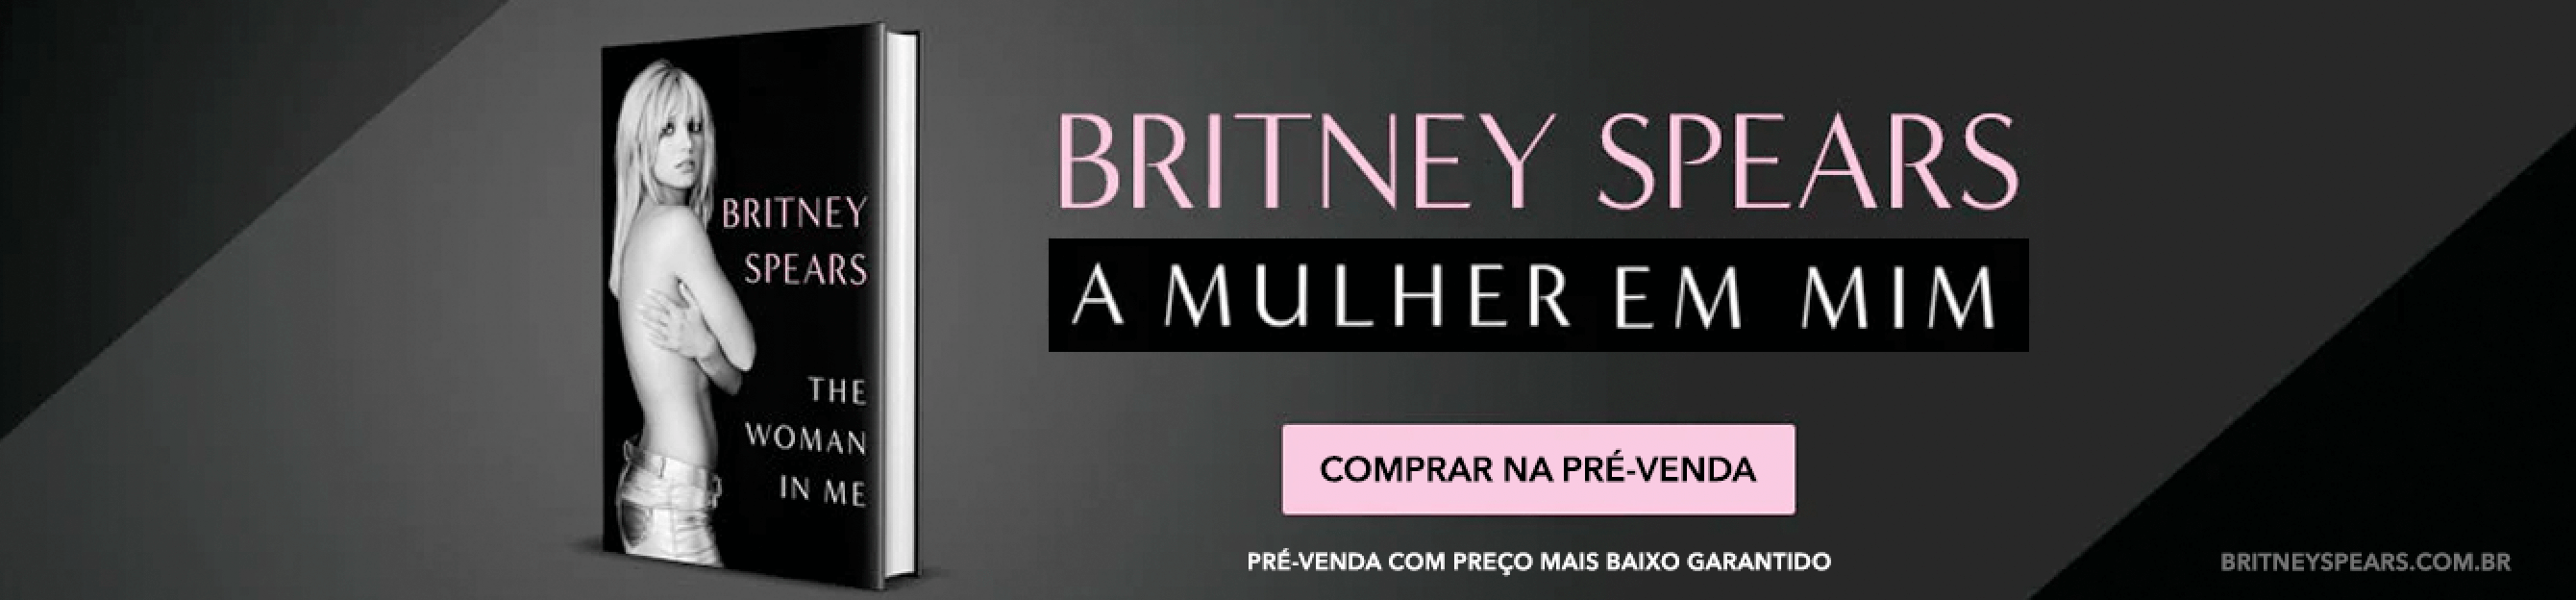 Comprar Pre-Venda Britney Spears A Mulher em Mim